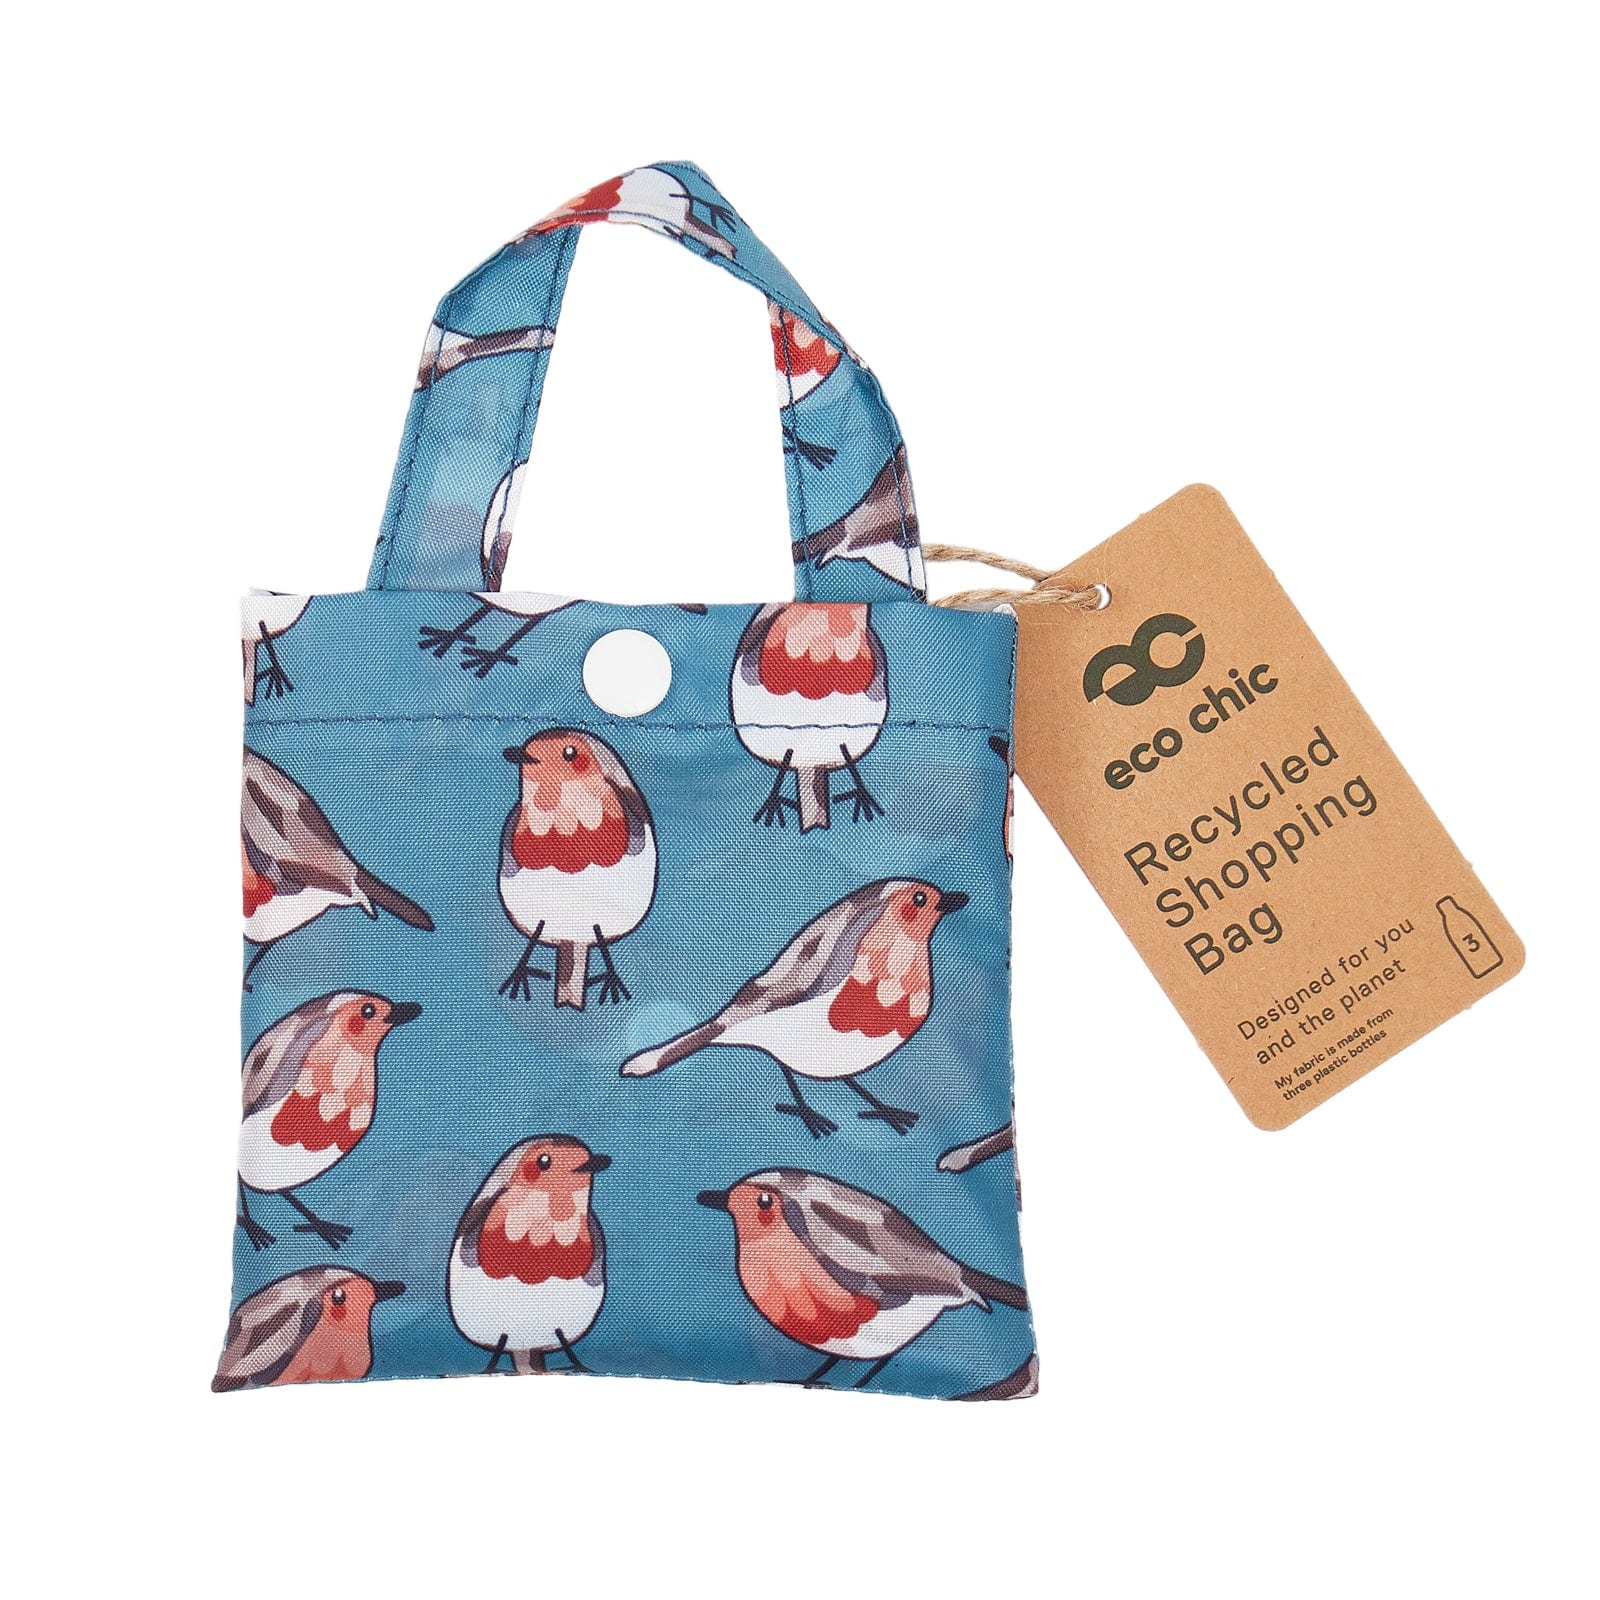 Eco Chic Teal Eco Chic Lightweight Foldable Reusable Shopping Bag Robins